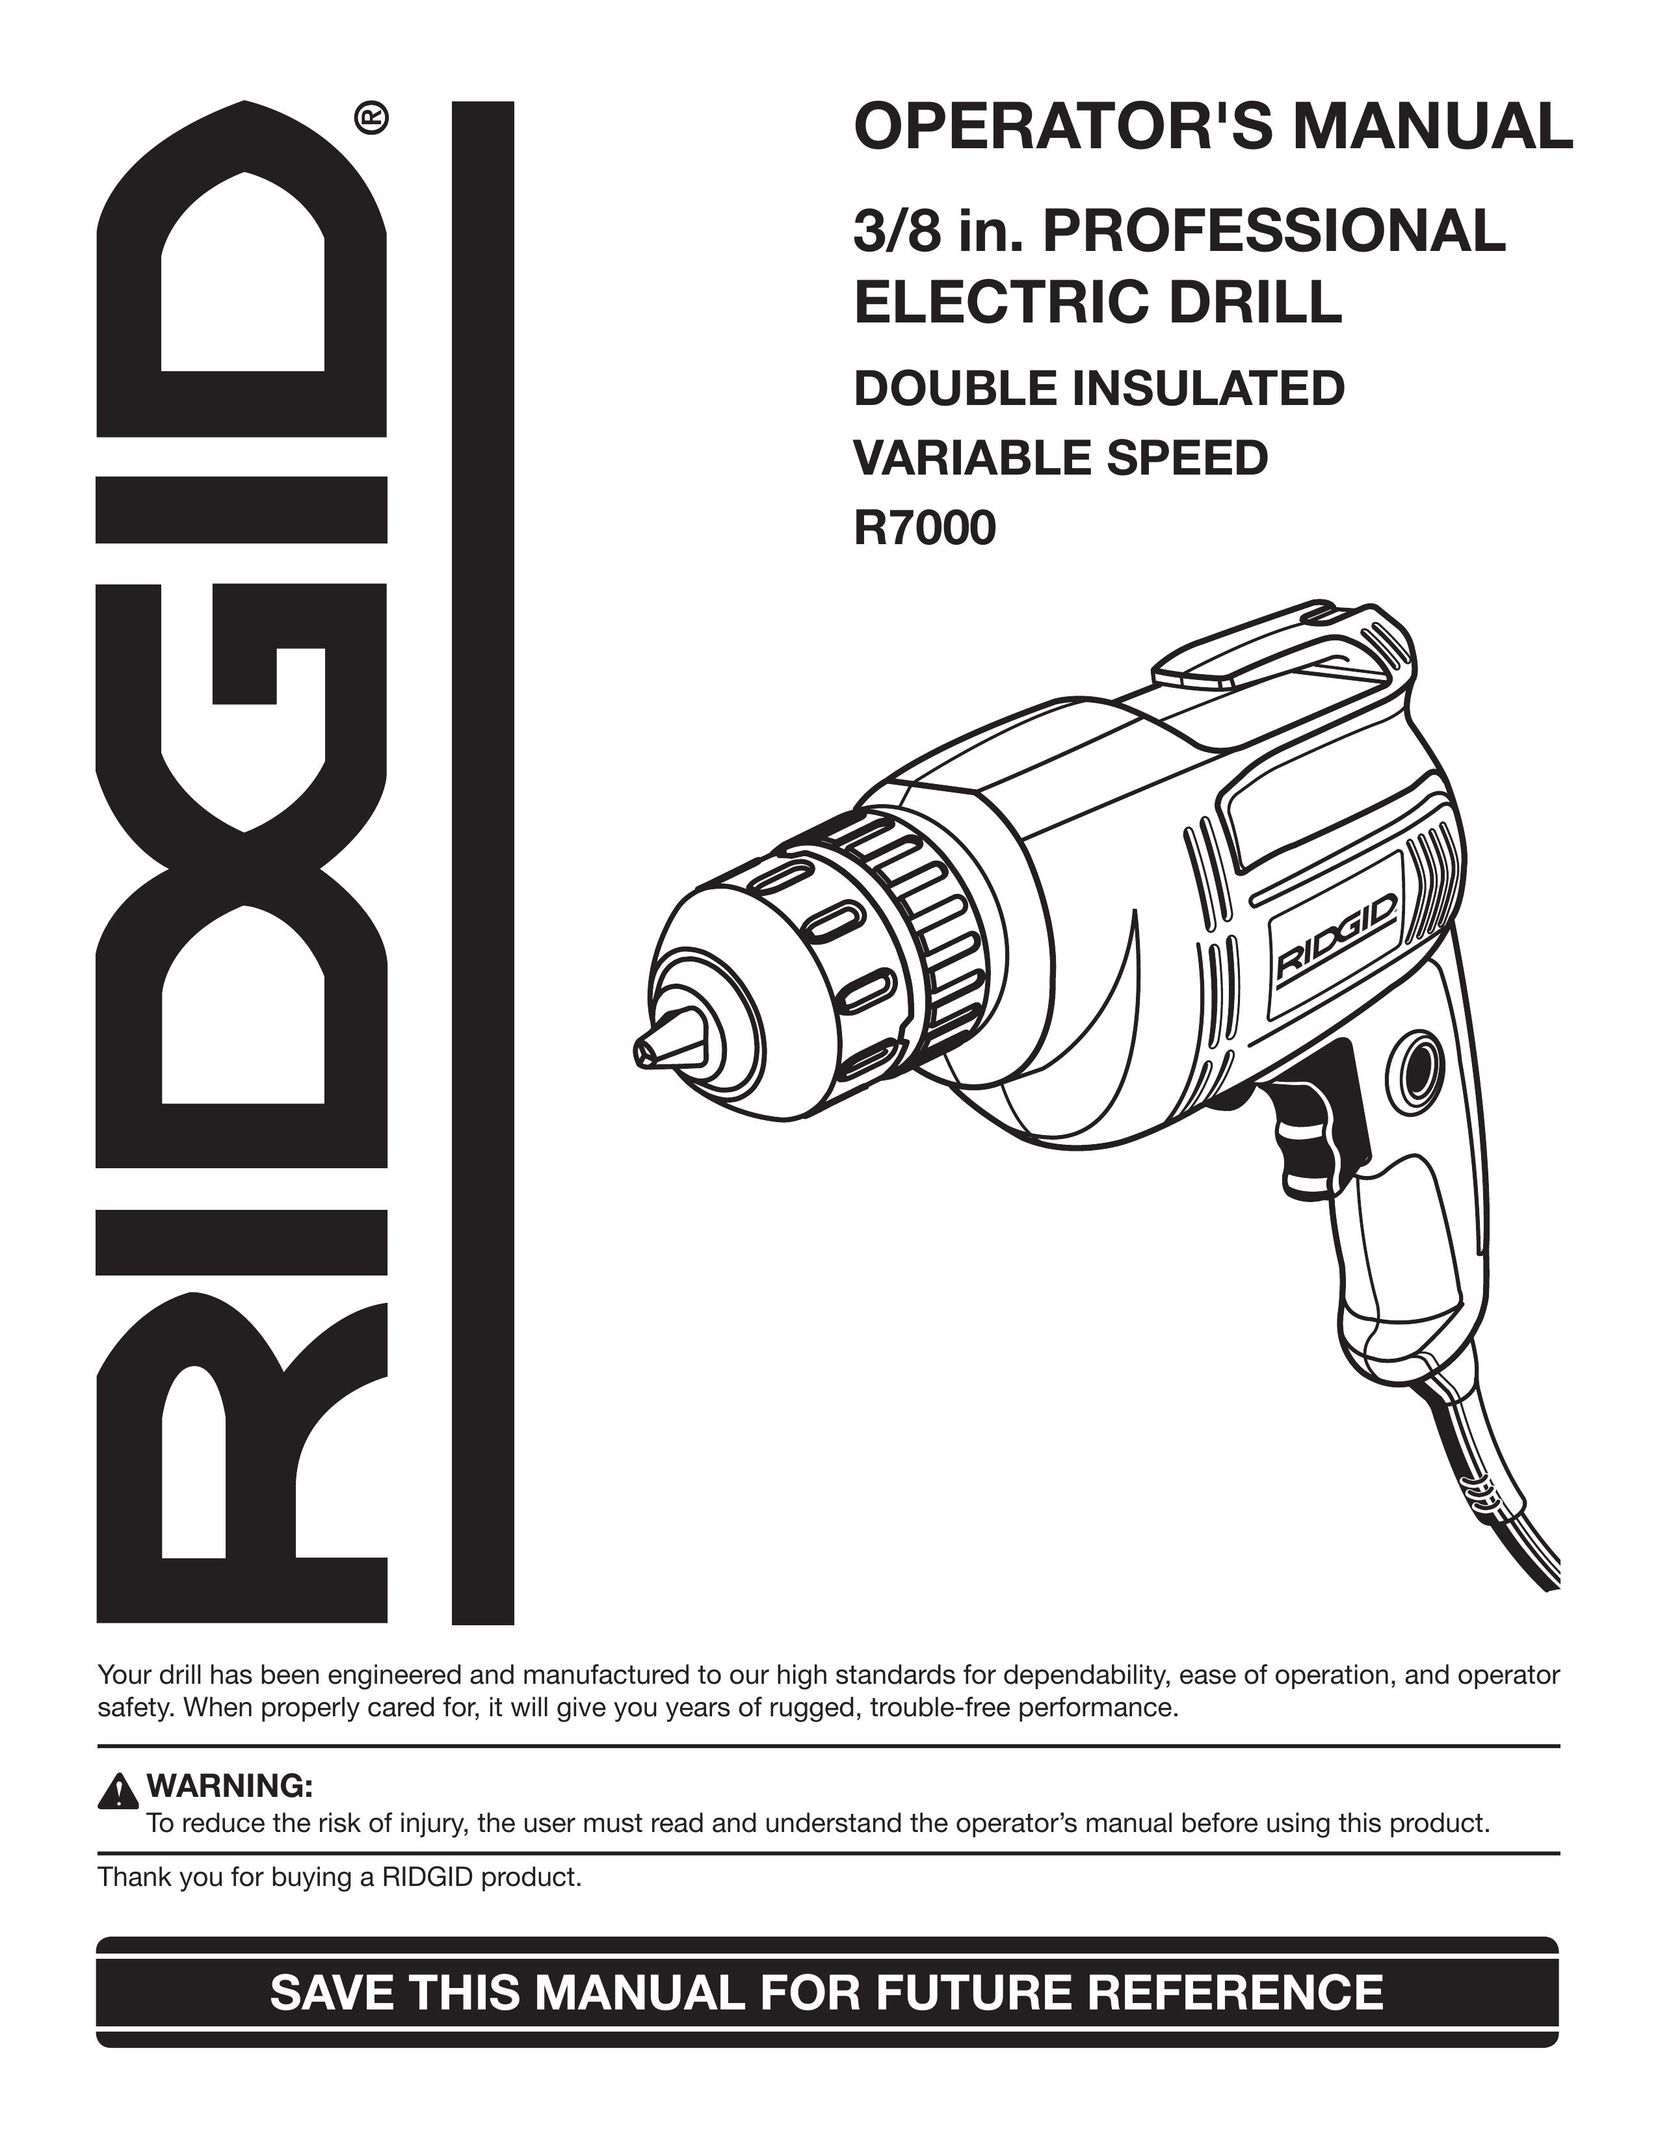 RIDGID R7000 Drill User Manual